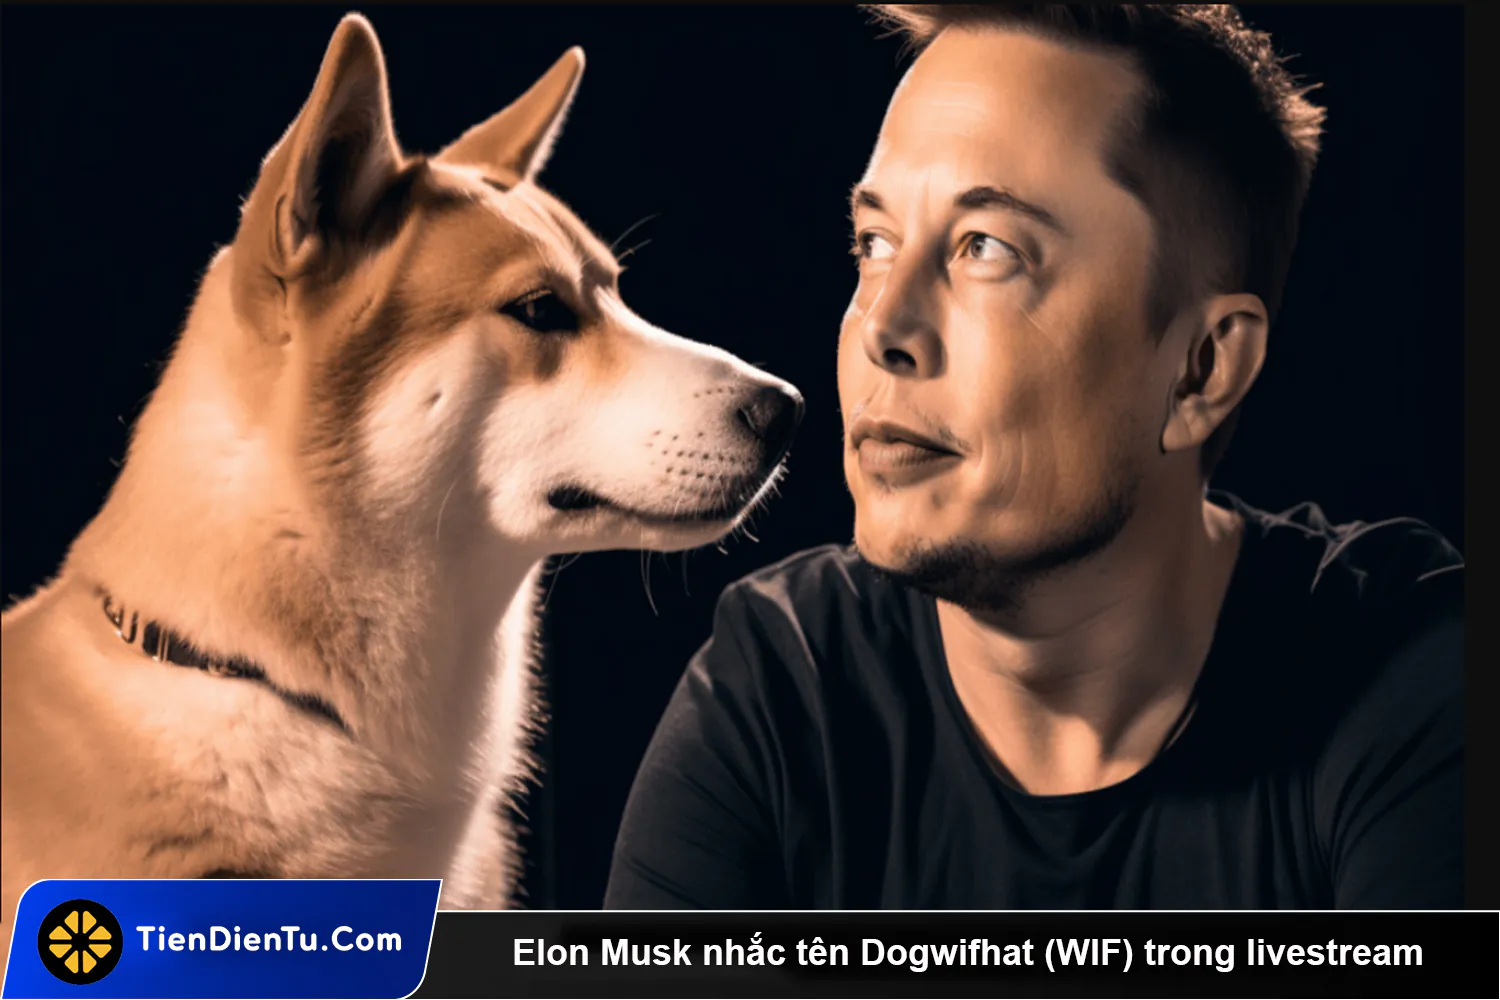 Elon Musk nhac ten Dogwifhat WIF trong livestream cua minh